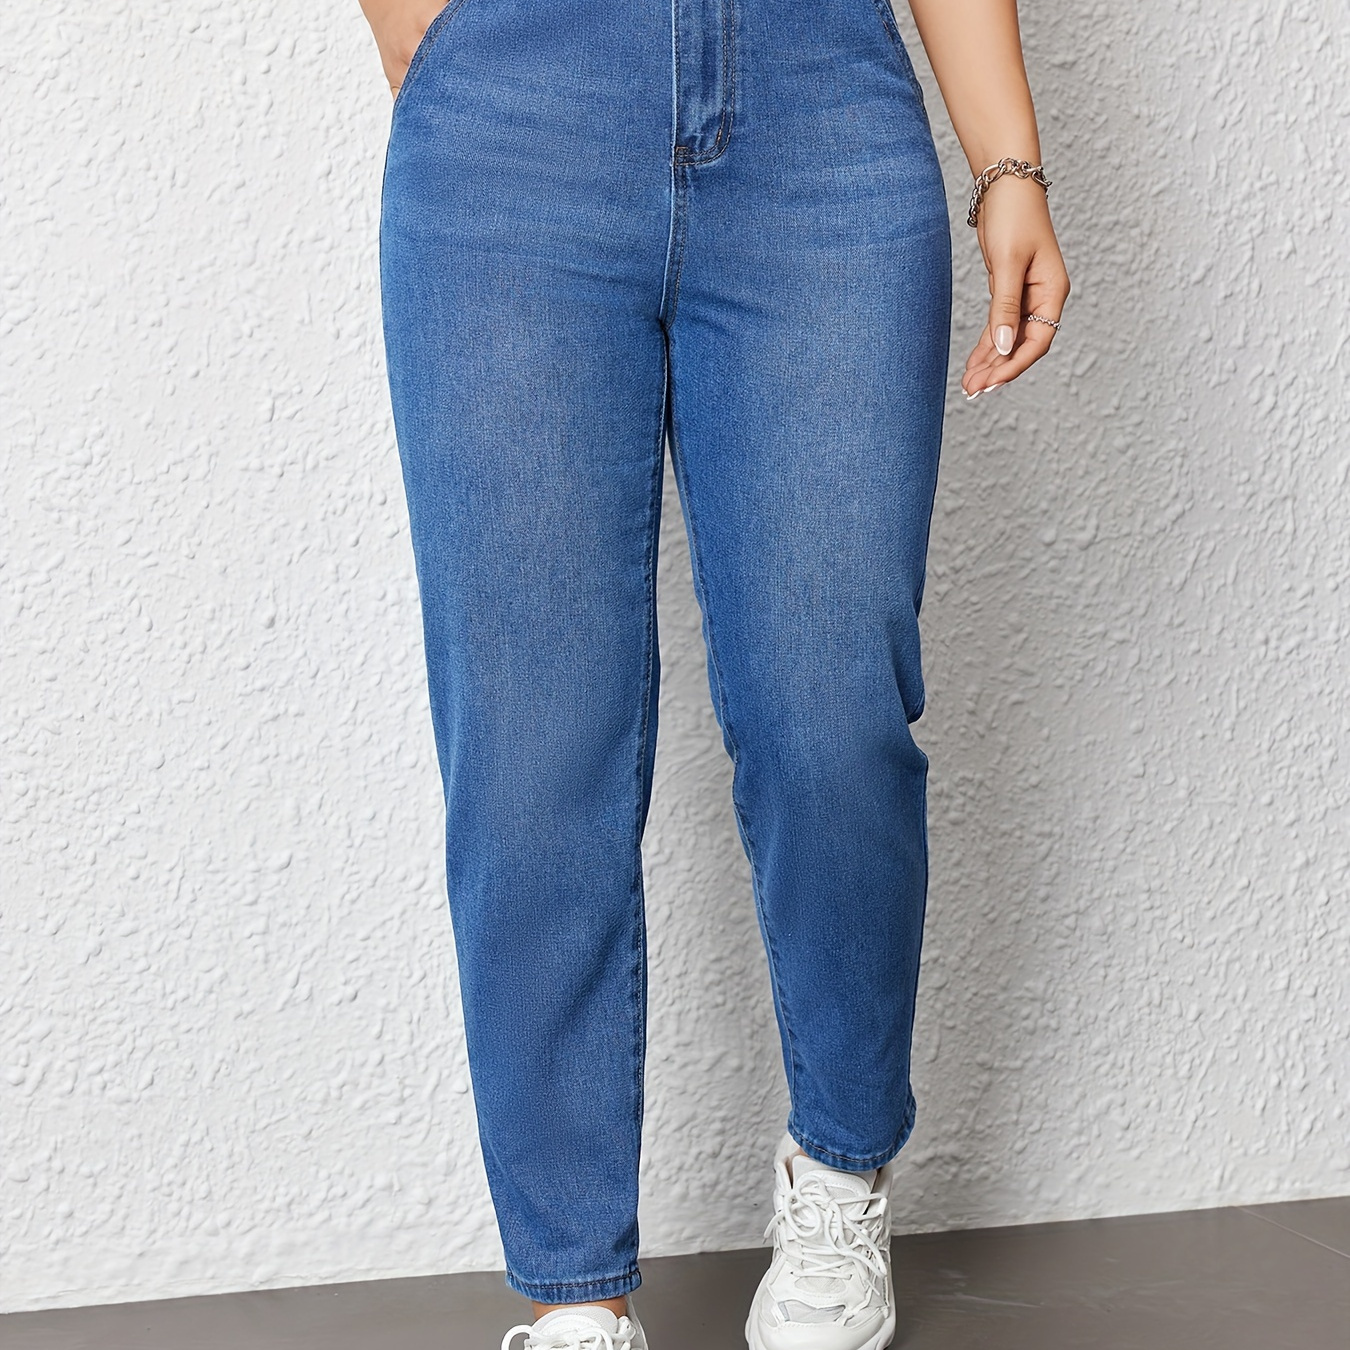 

Women's Casual Blue Elastic Waist Plain Washed Jeans, Comfortable Relaxed Fit Capri Denim Pants